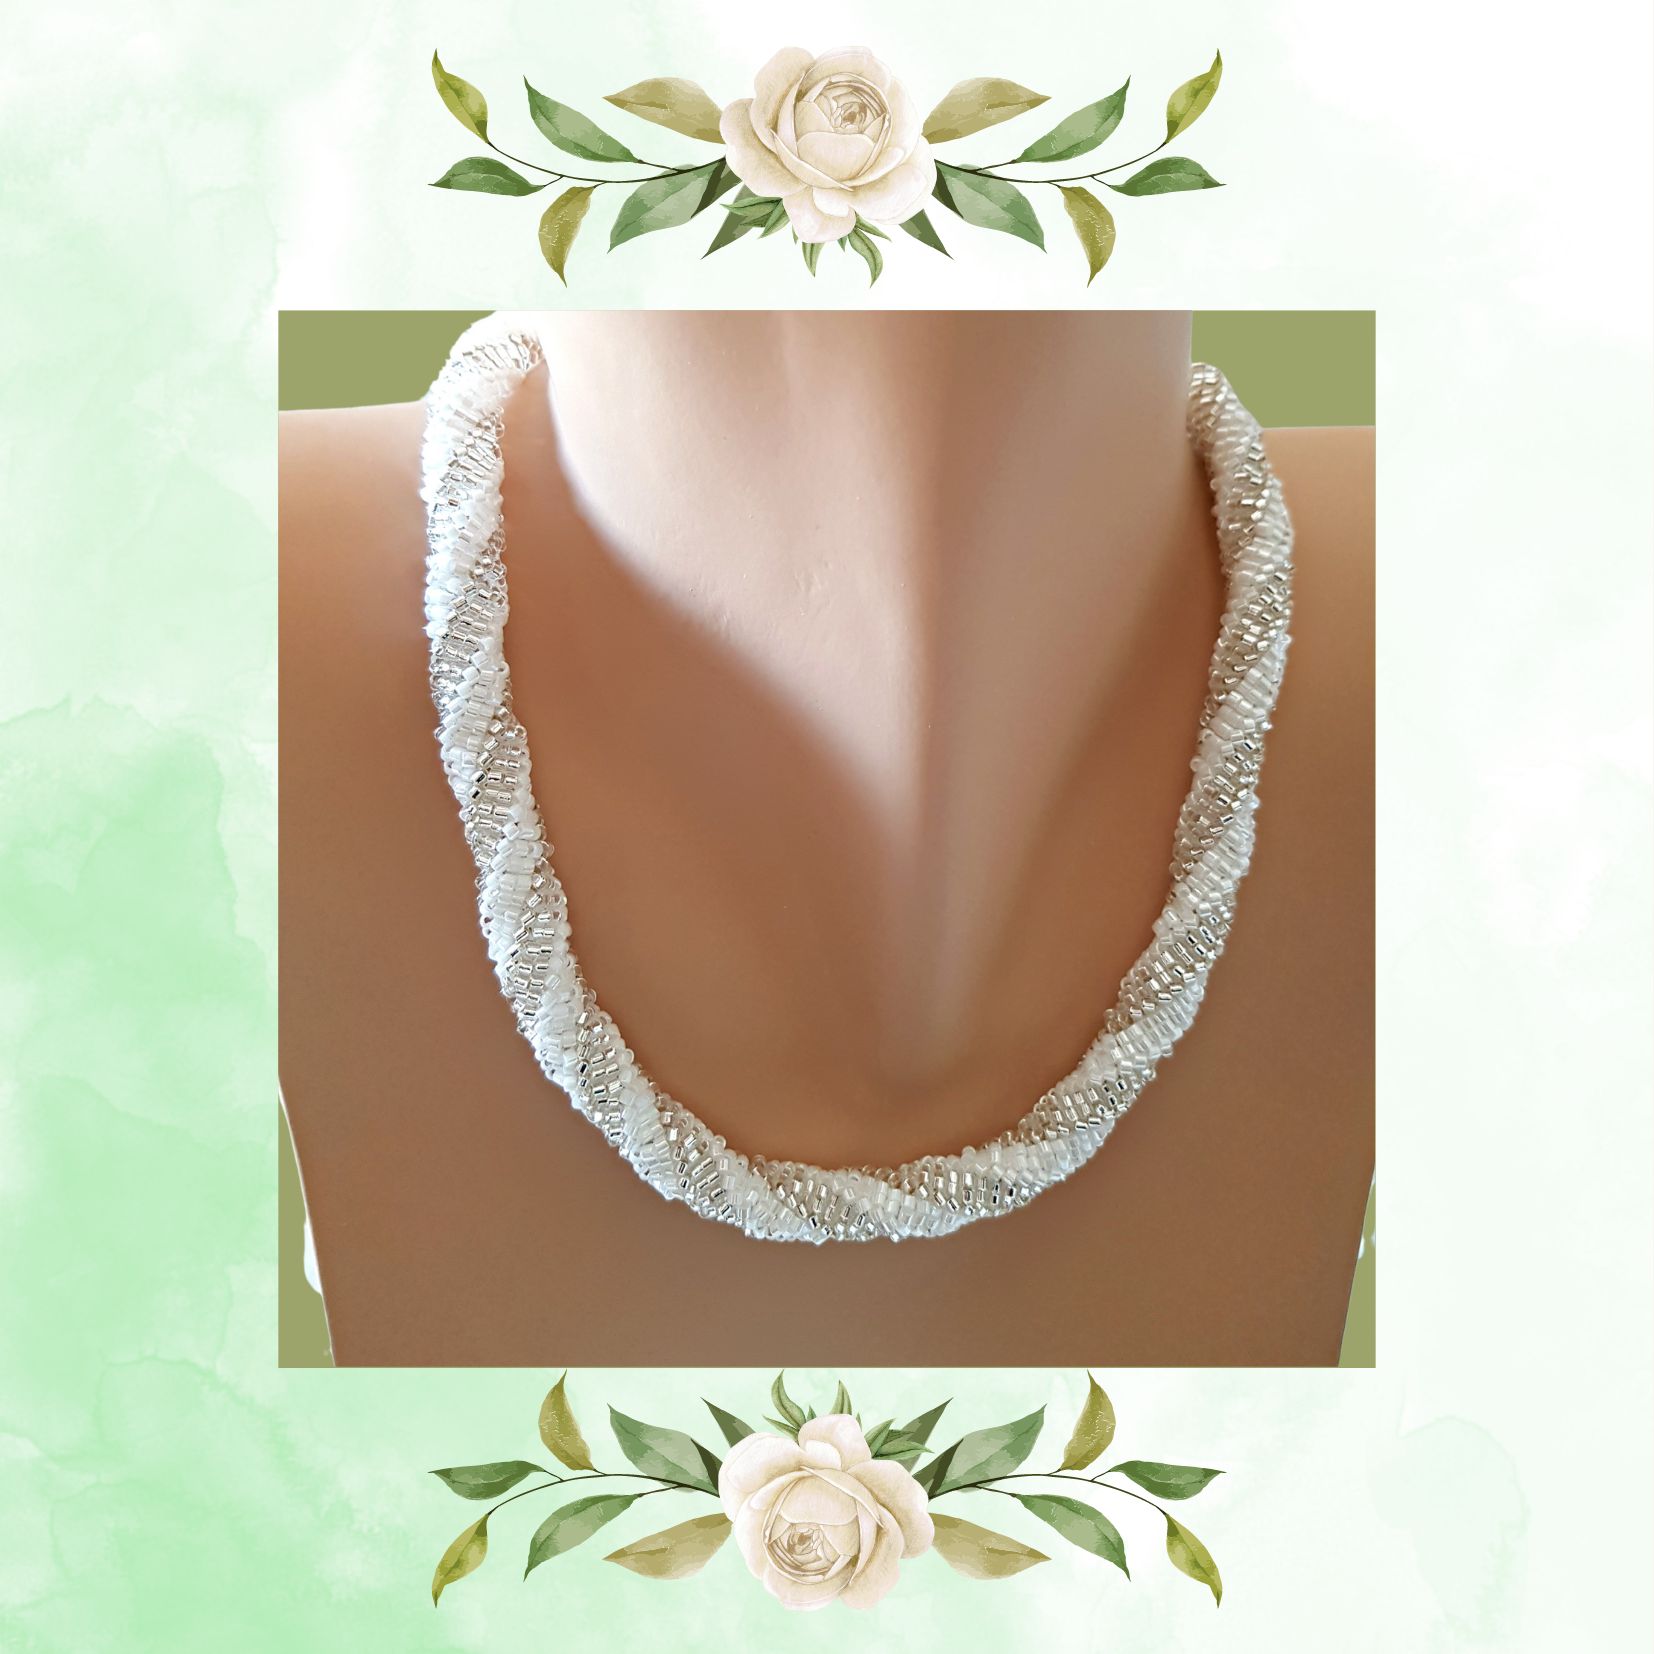 Leonor - Elegant necklace for ceremony